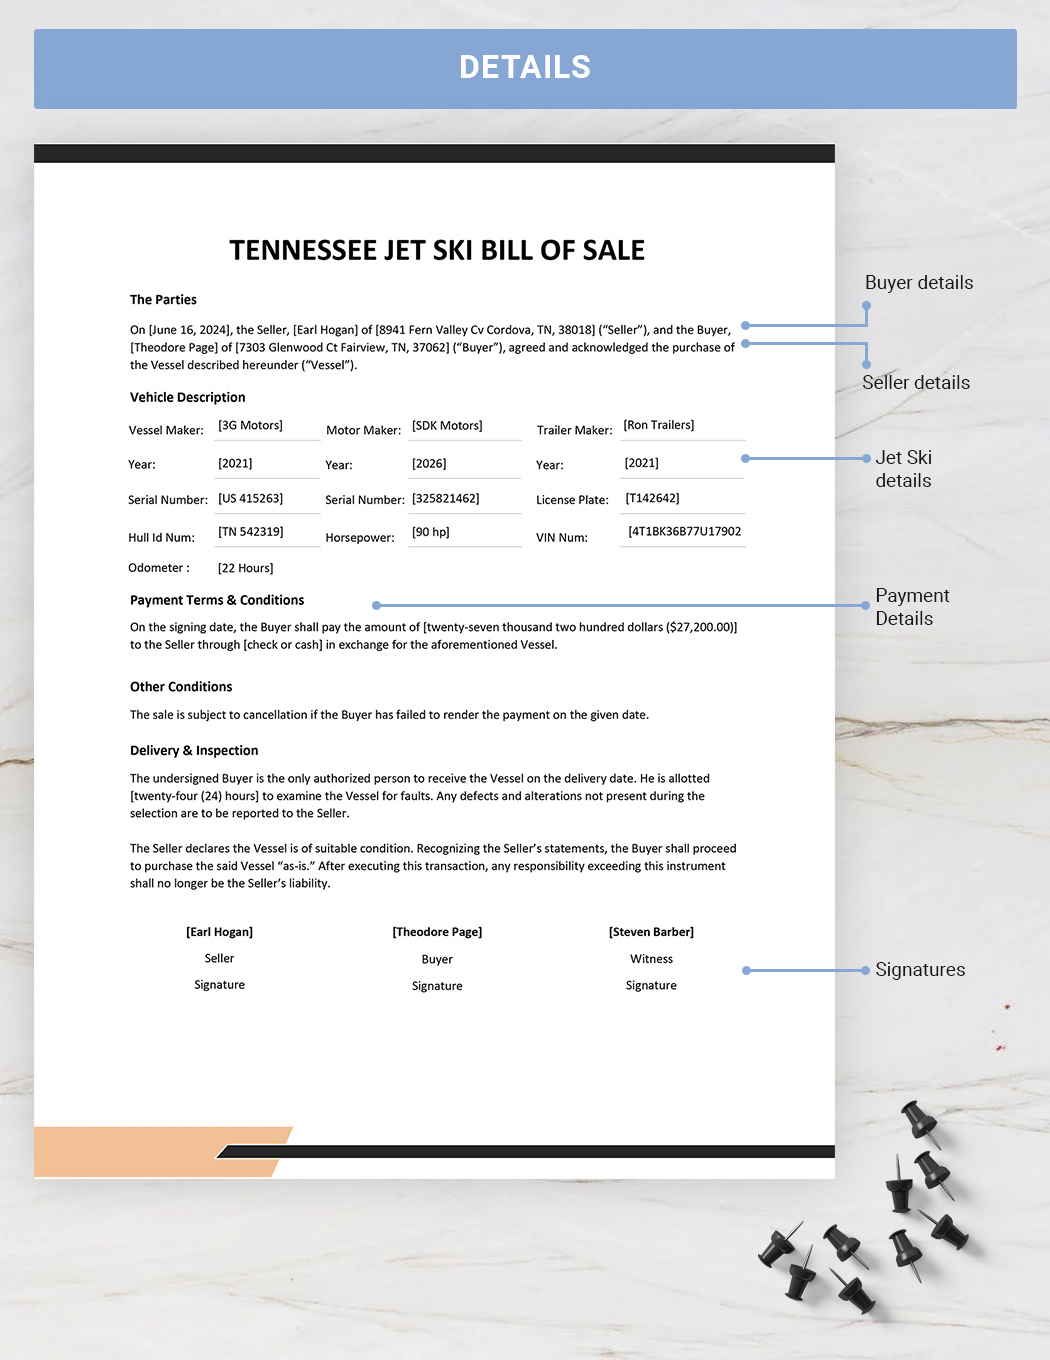 Tennessee Jet Ski Bill of Sale Template